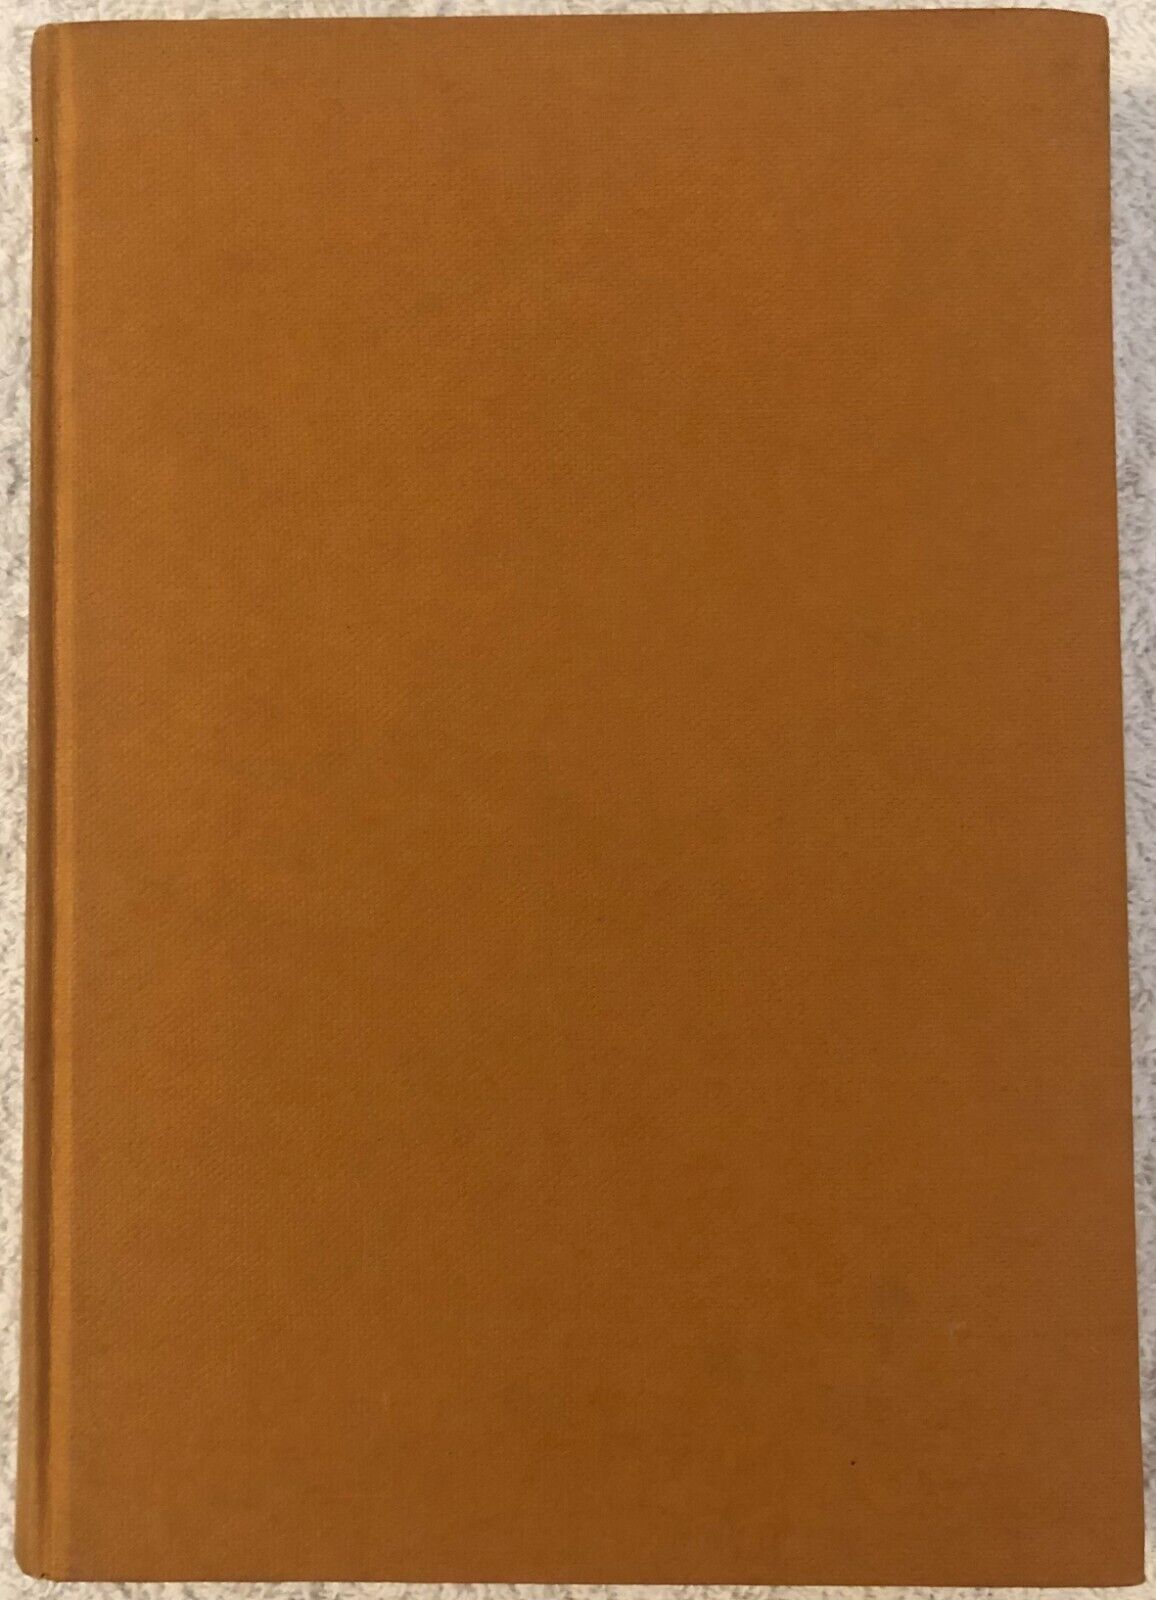 Ribelli senza programma di George F. Kennan,  1969,  Rizzoli